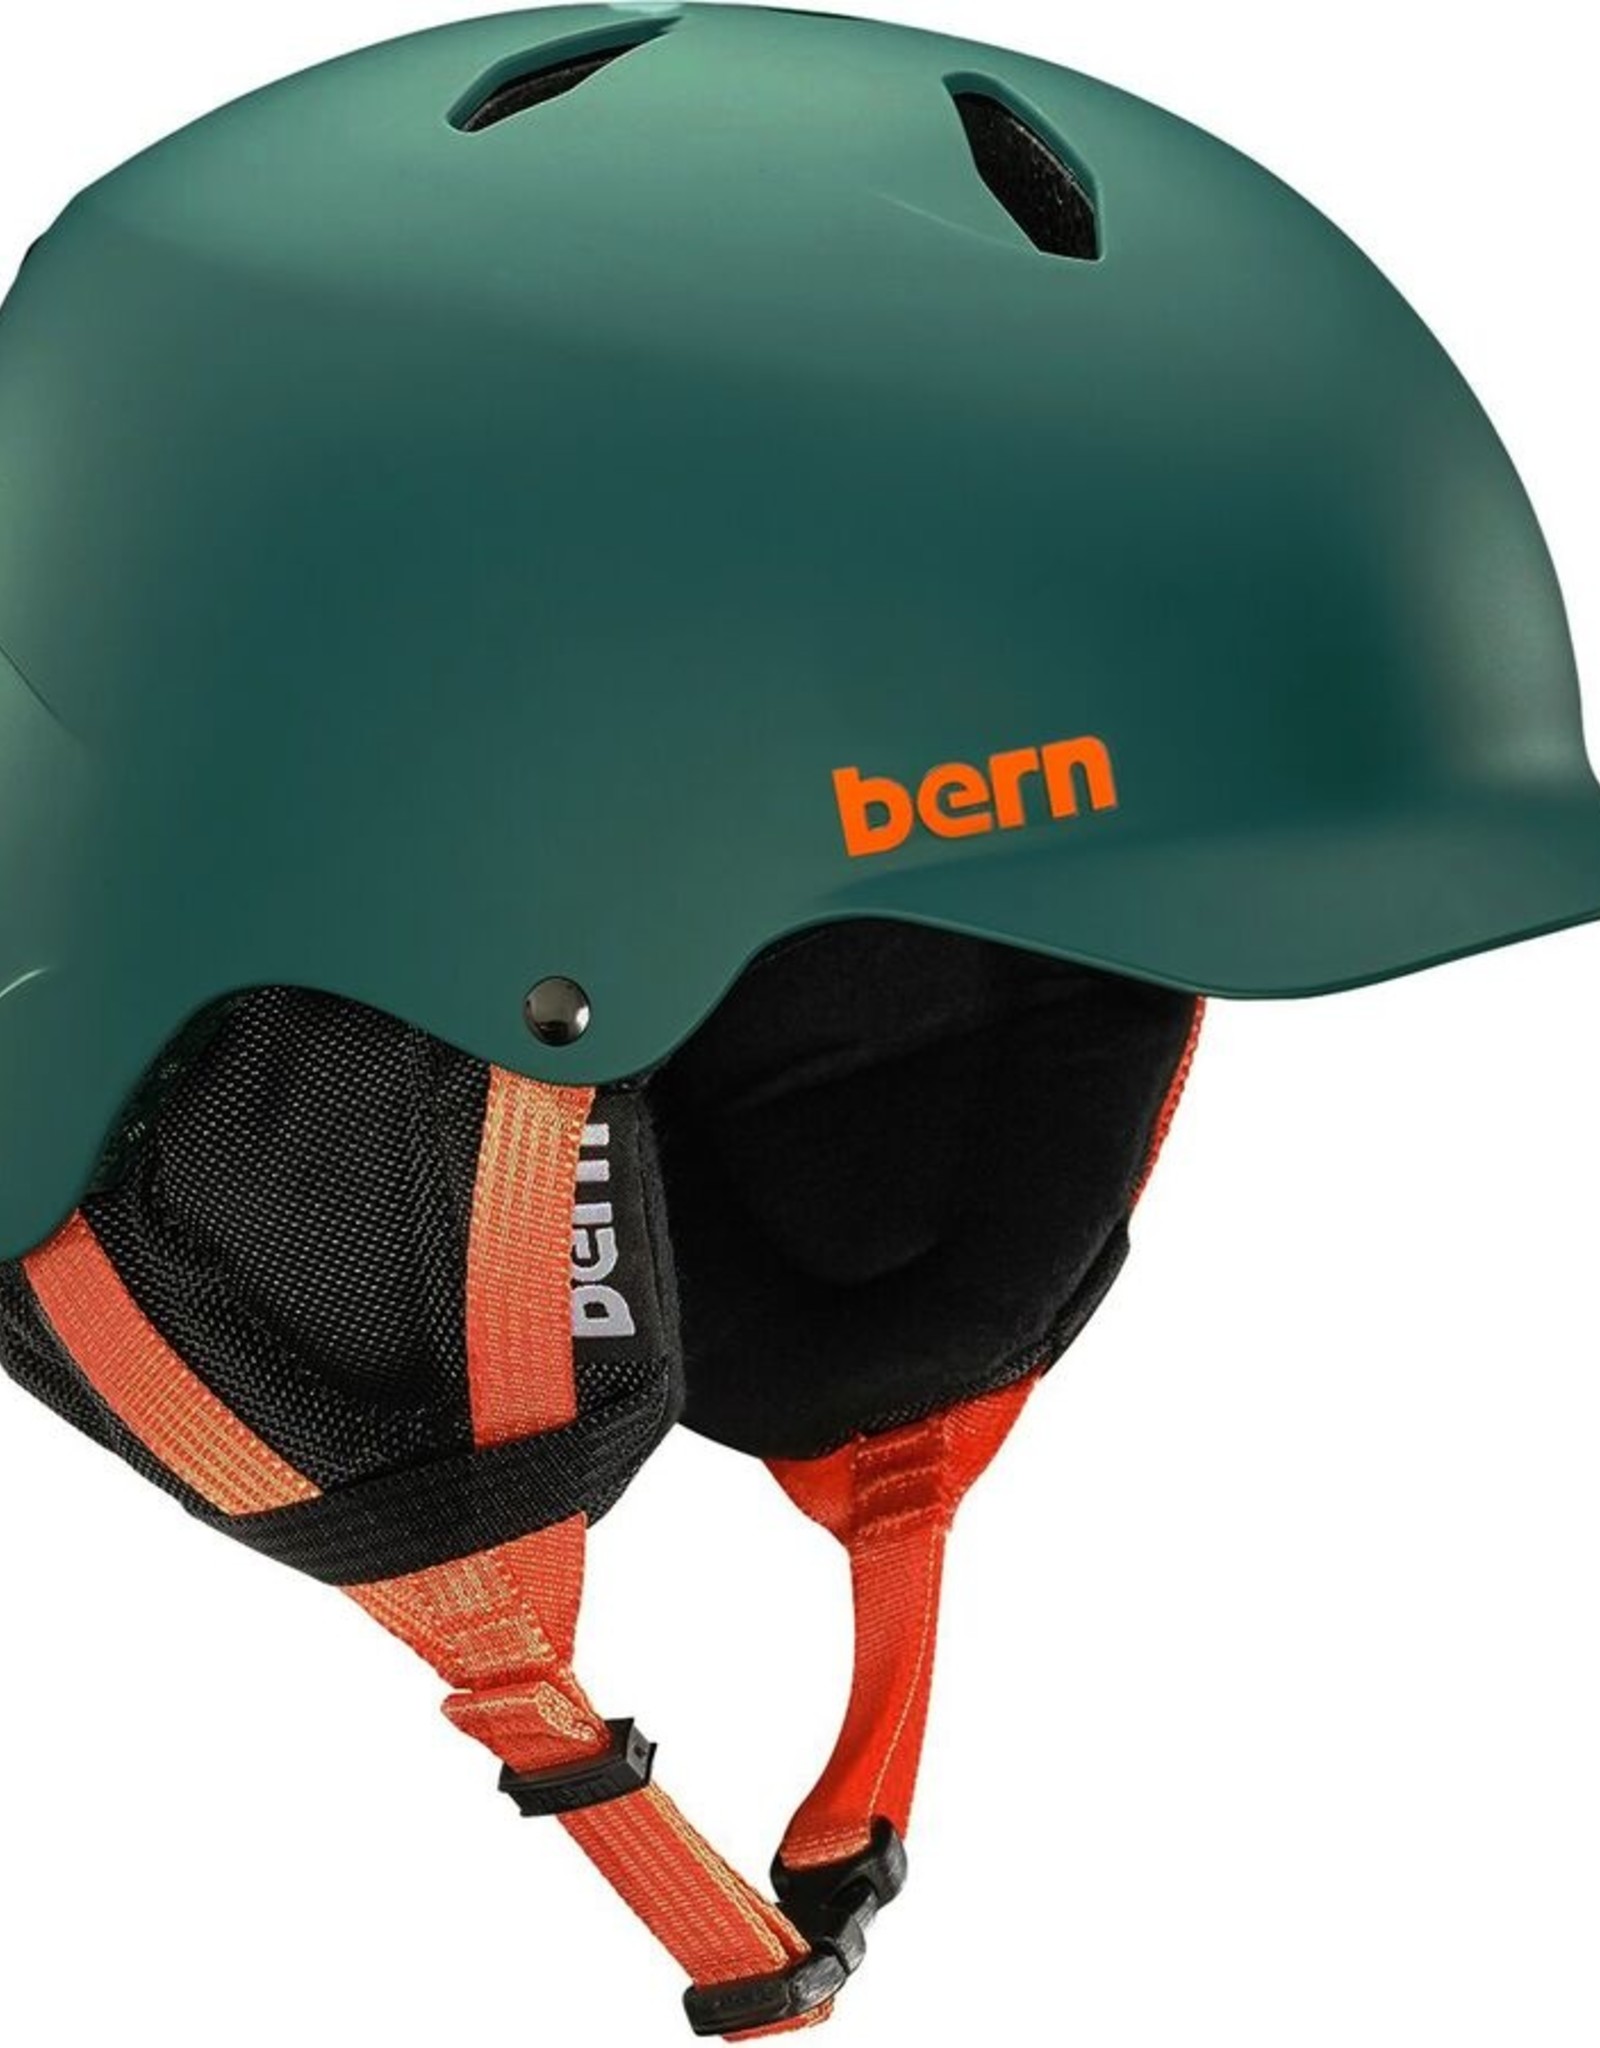 Bern Bern Bandito Jr.